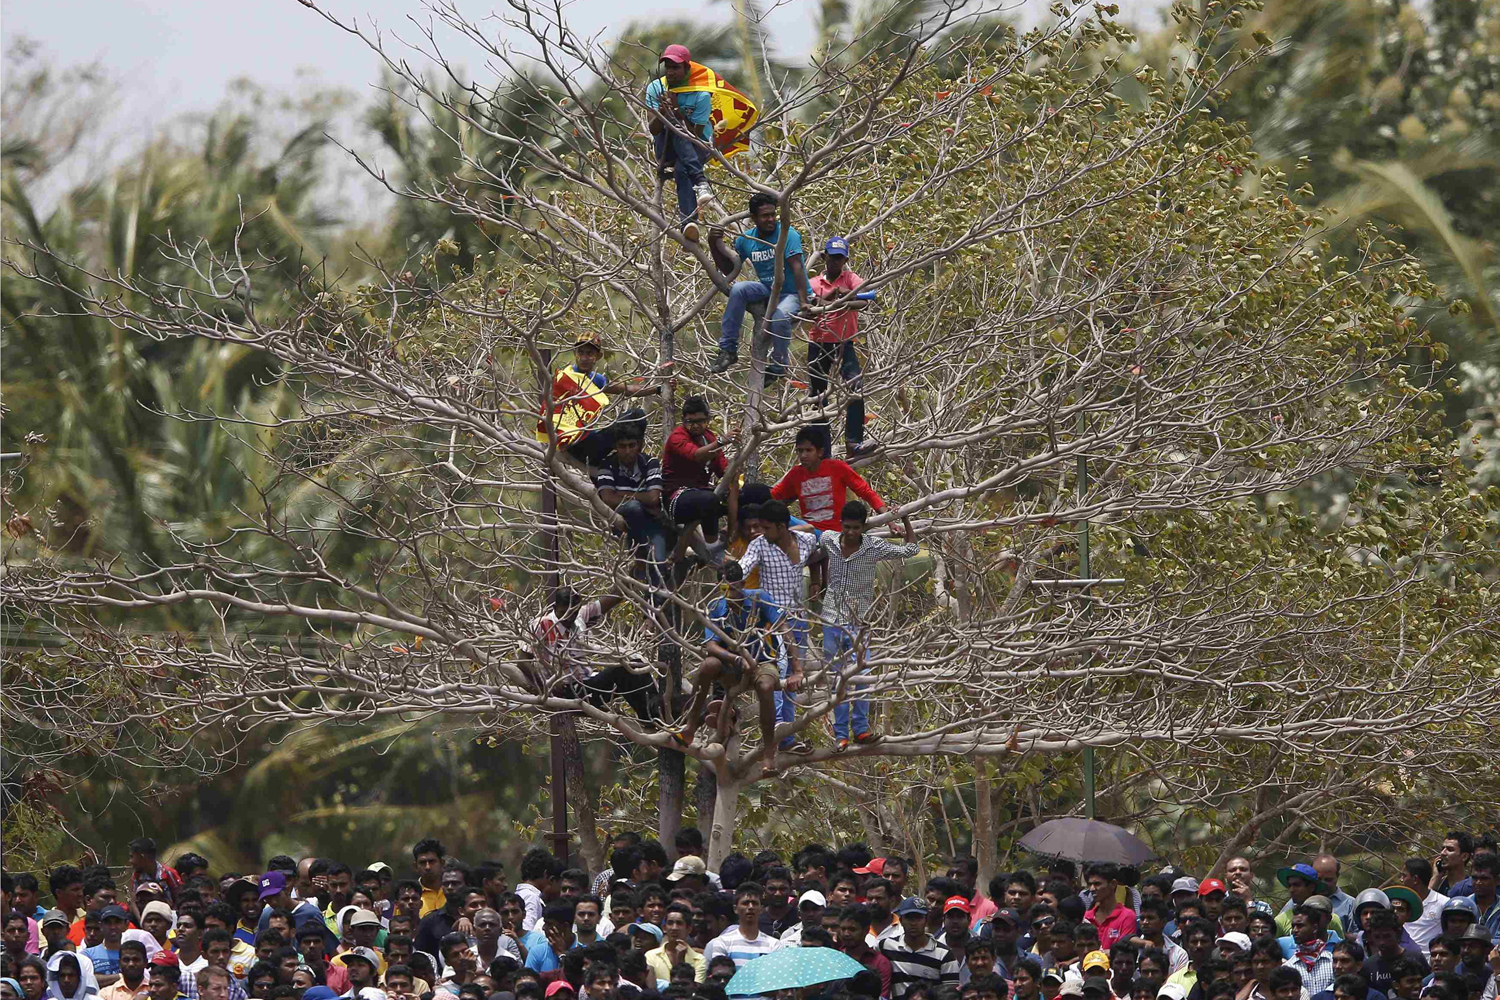 Sri Lanka's cricket fans watch the match from a tree during the final ODI cricket match between Pakistan and Sri Lanka in Dambulla